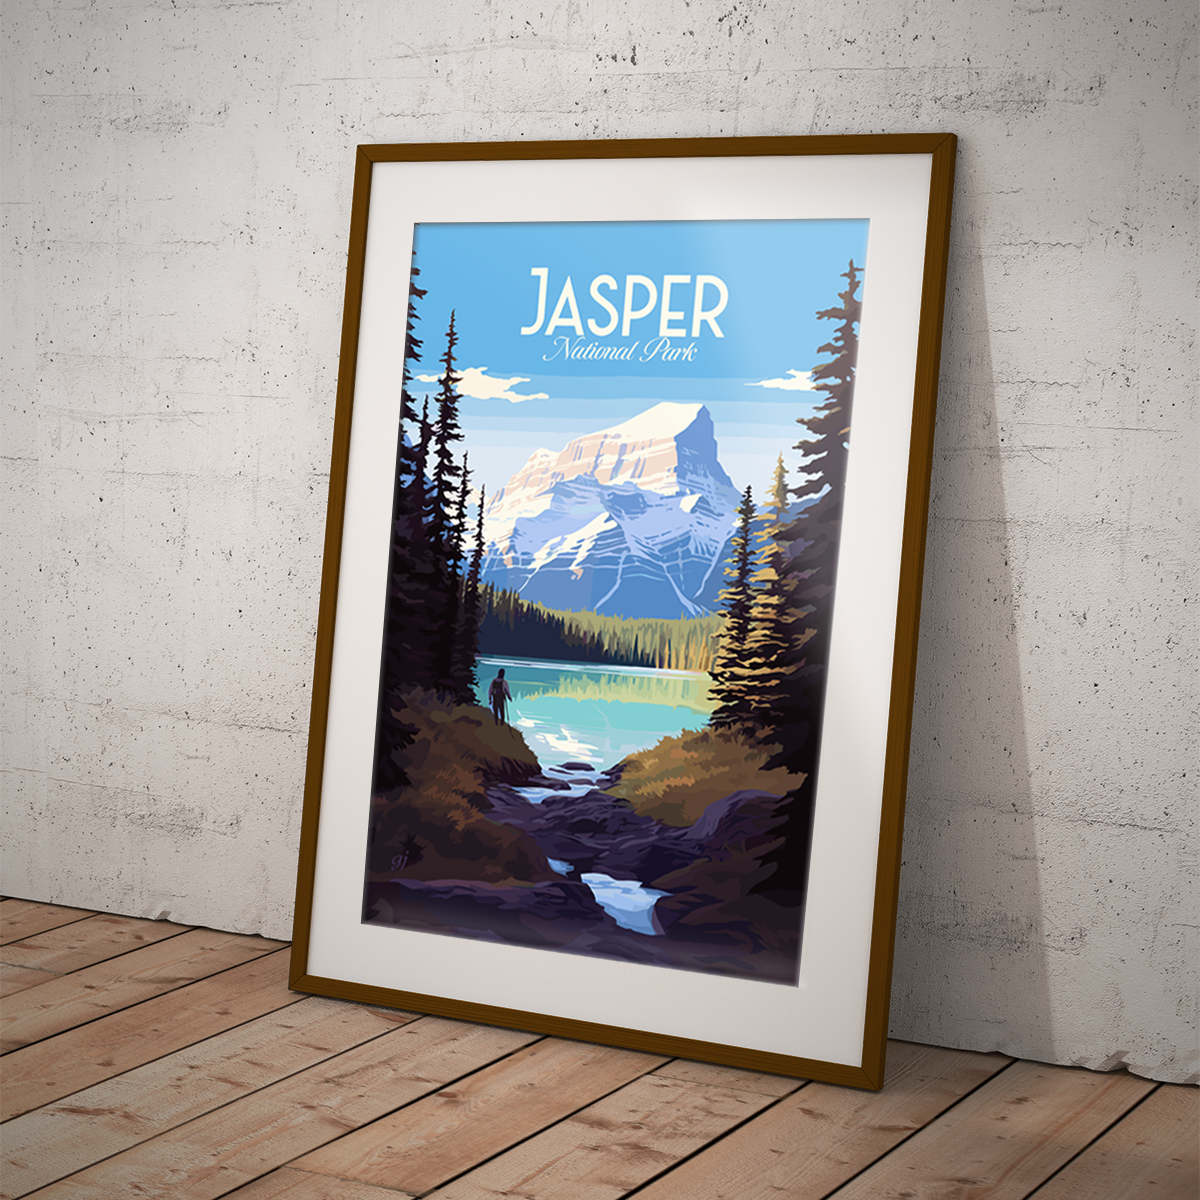 Jasper poster by bon voyage design